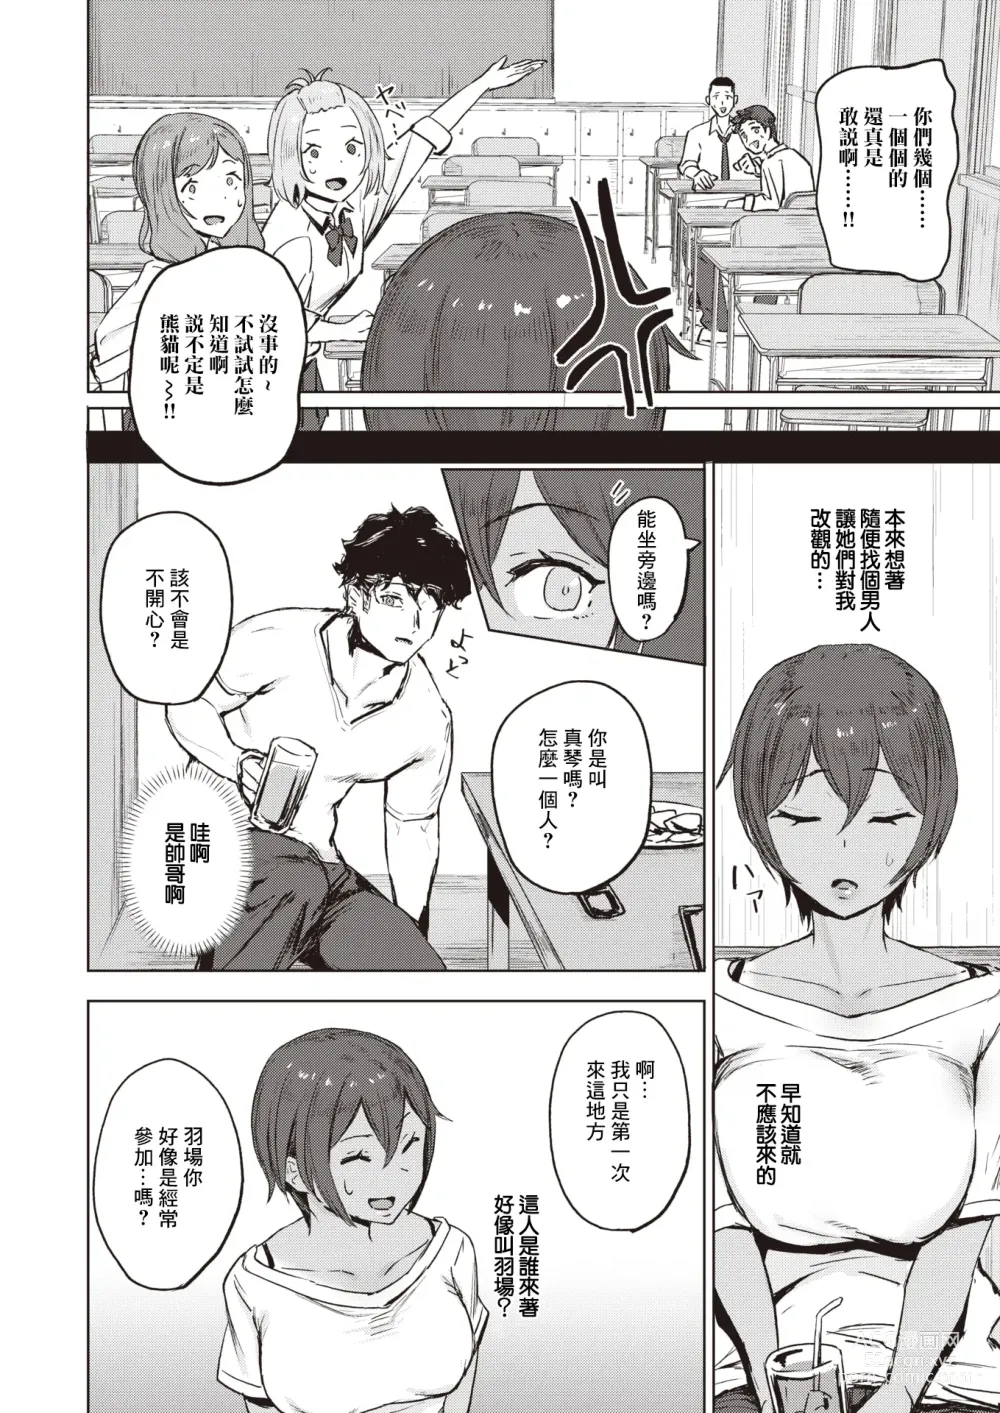 Page 5 of manga Kimochii  Koto  ni wa Sakaraenai - musclehead girl cant resist orgasm